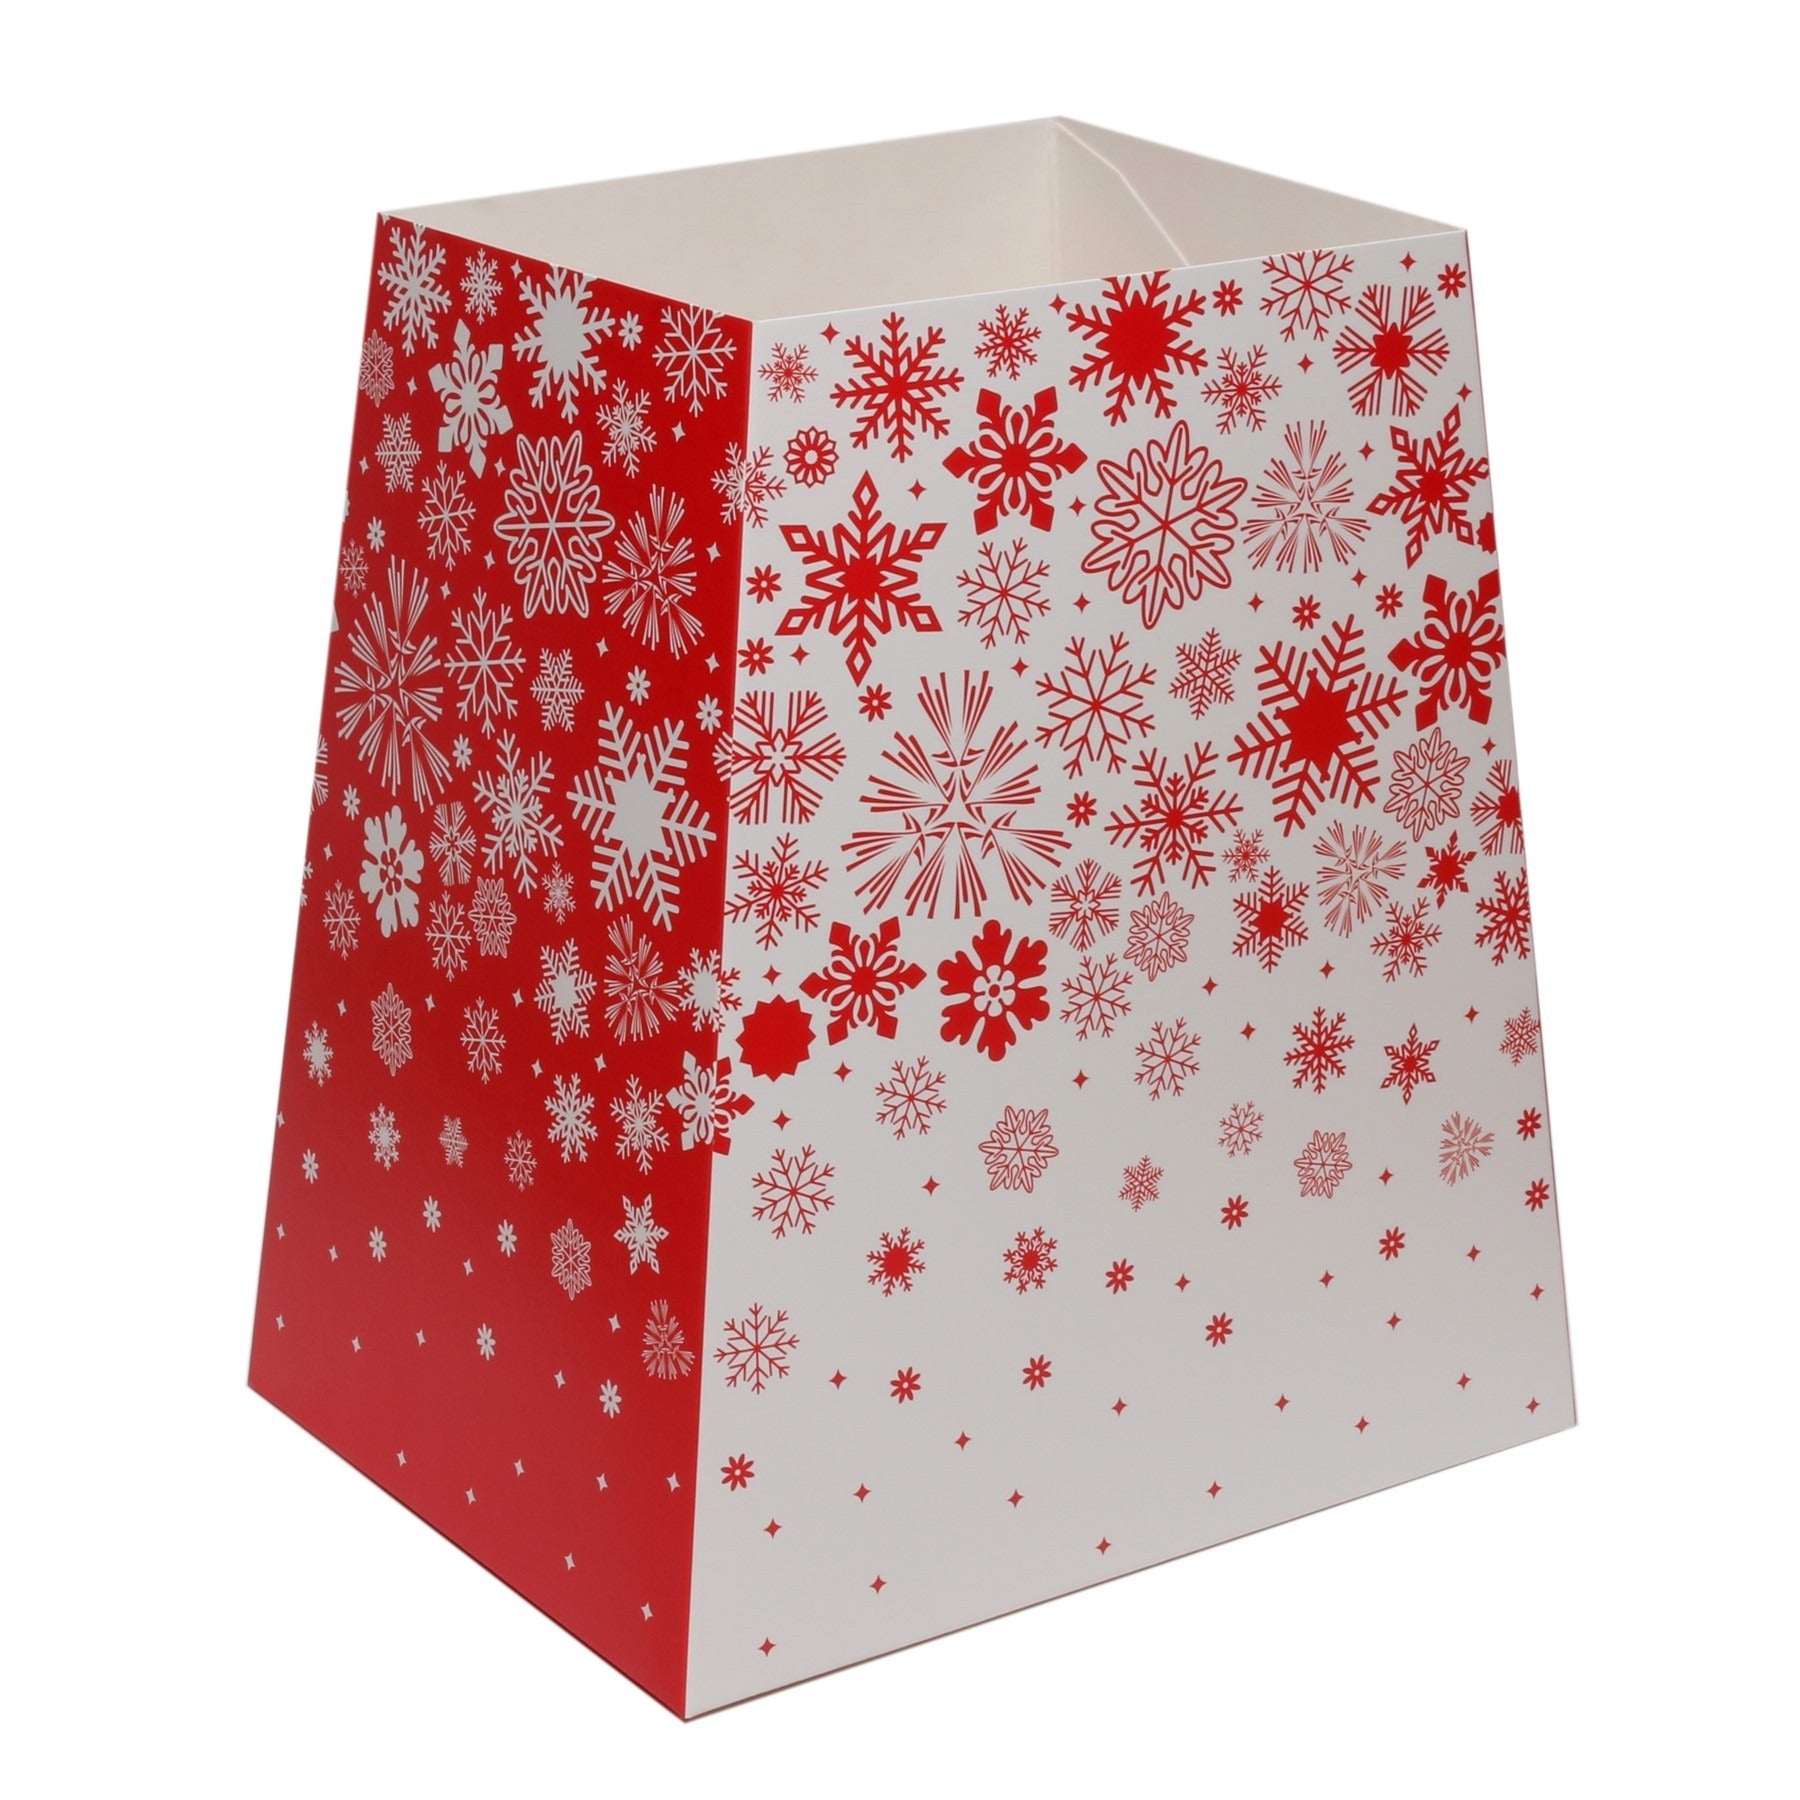 View Red White Snowflakes Gift Box 19 x 12 x 9cm information